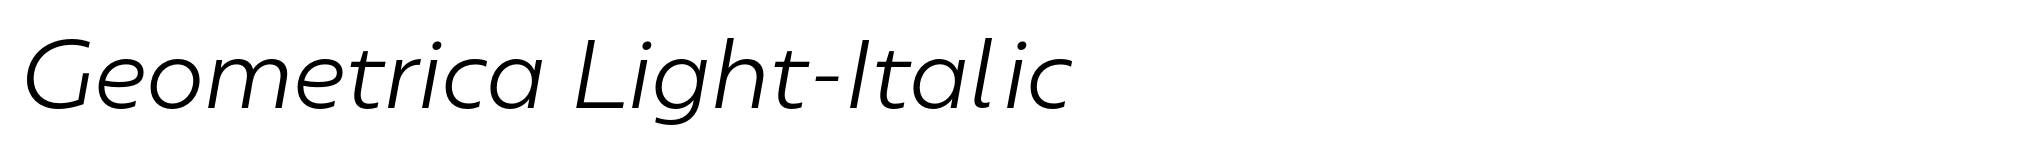 Geometrica Light-Italic image